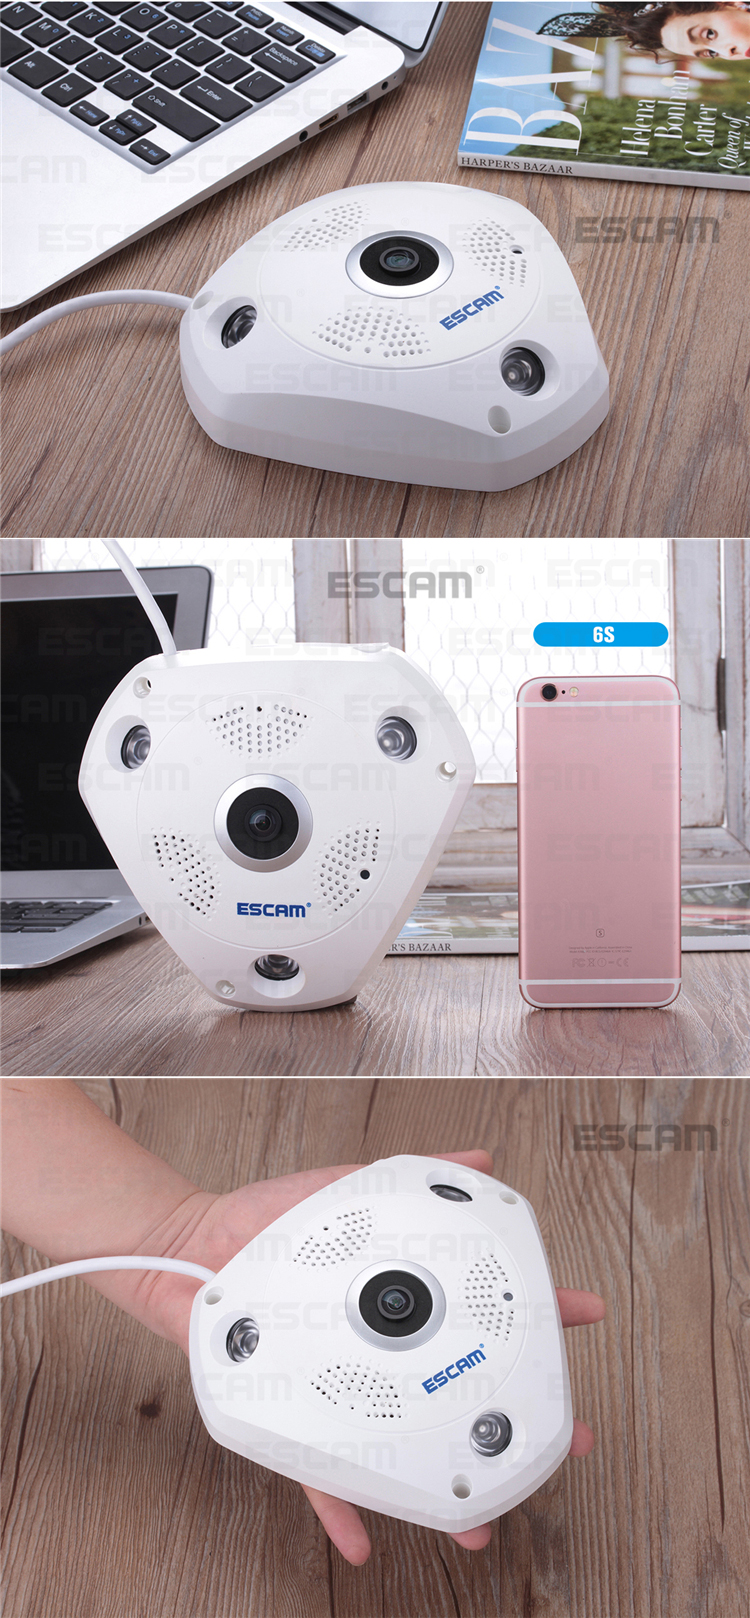 ESCAM Fisheye Camera Support VR QP180 Shark 960P IP WiFi Camera 1.3MP 360 Degree Panoramic Infrared Night Vision Camera 42